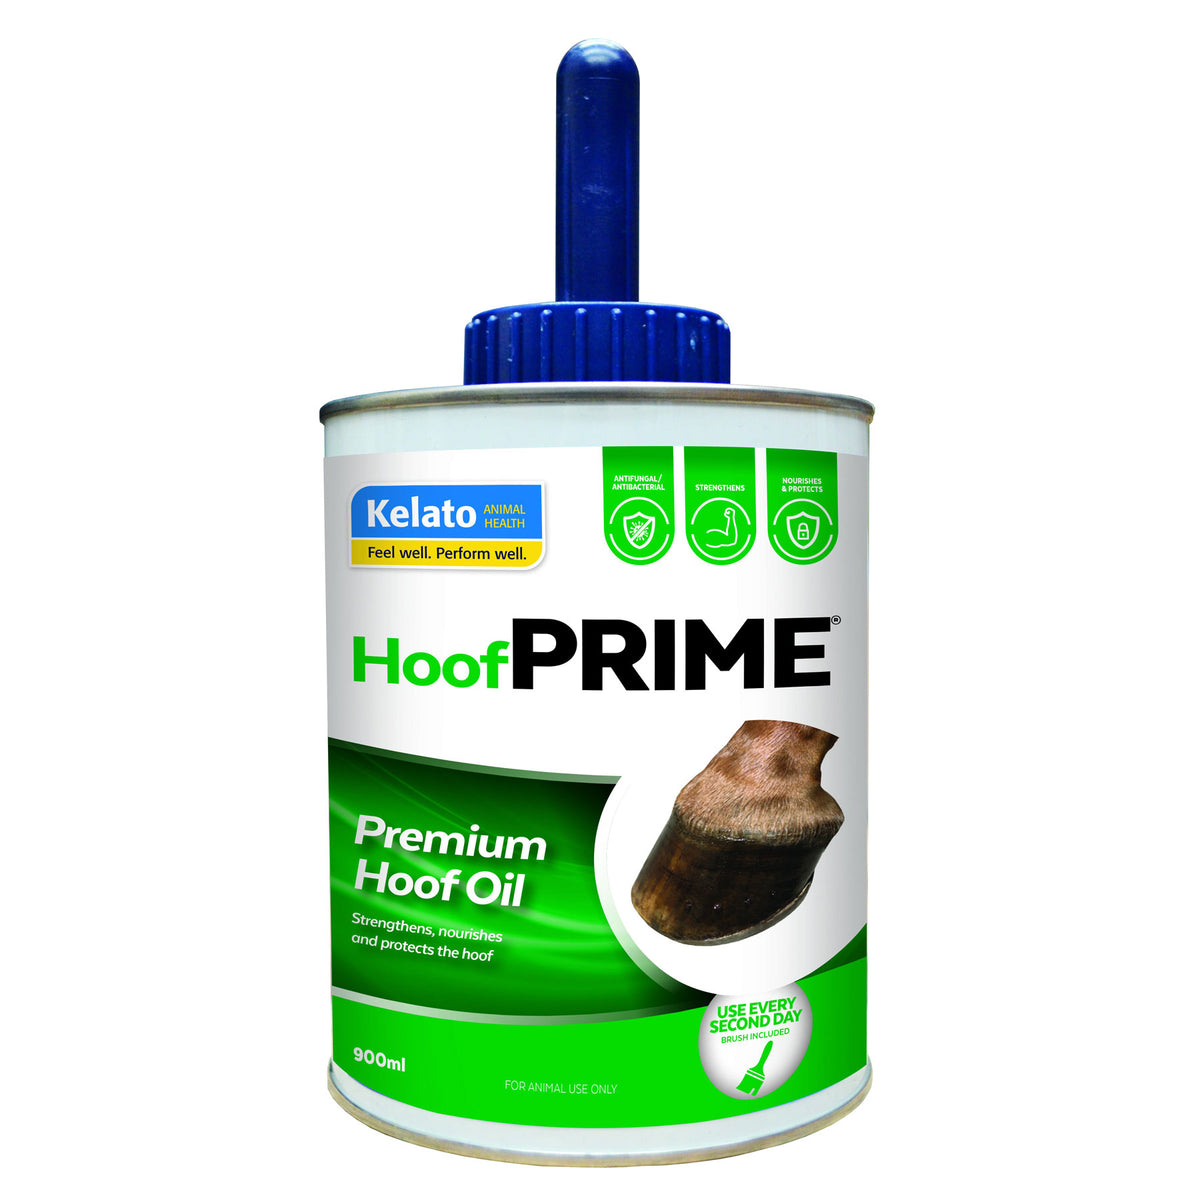 HoofPRIME Premium Hoof Oil